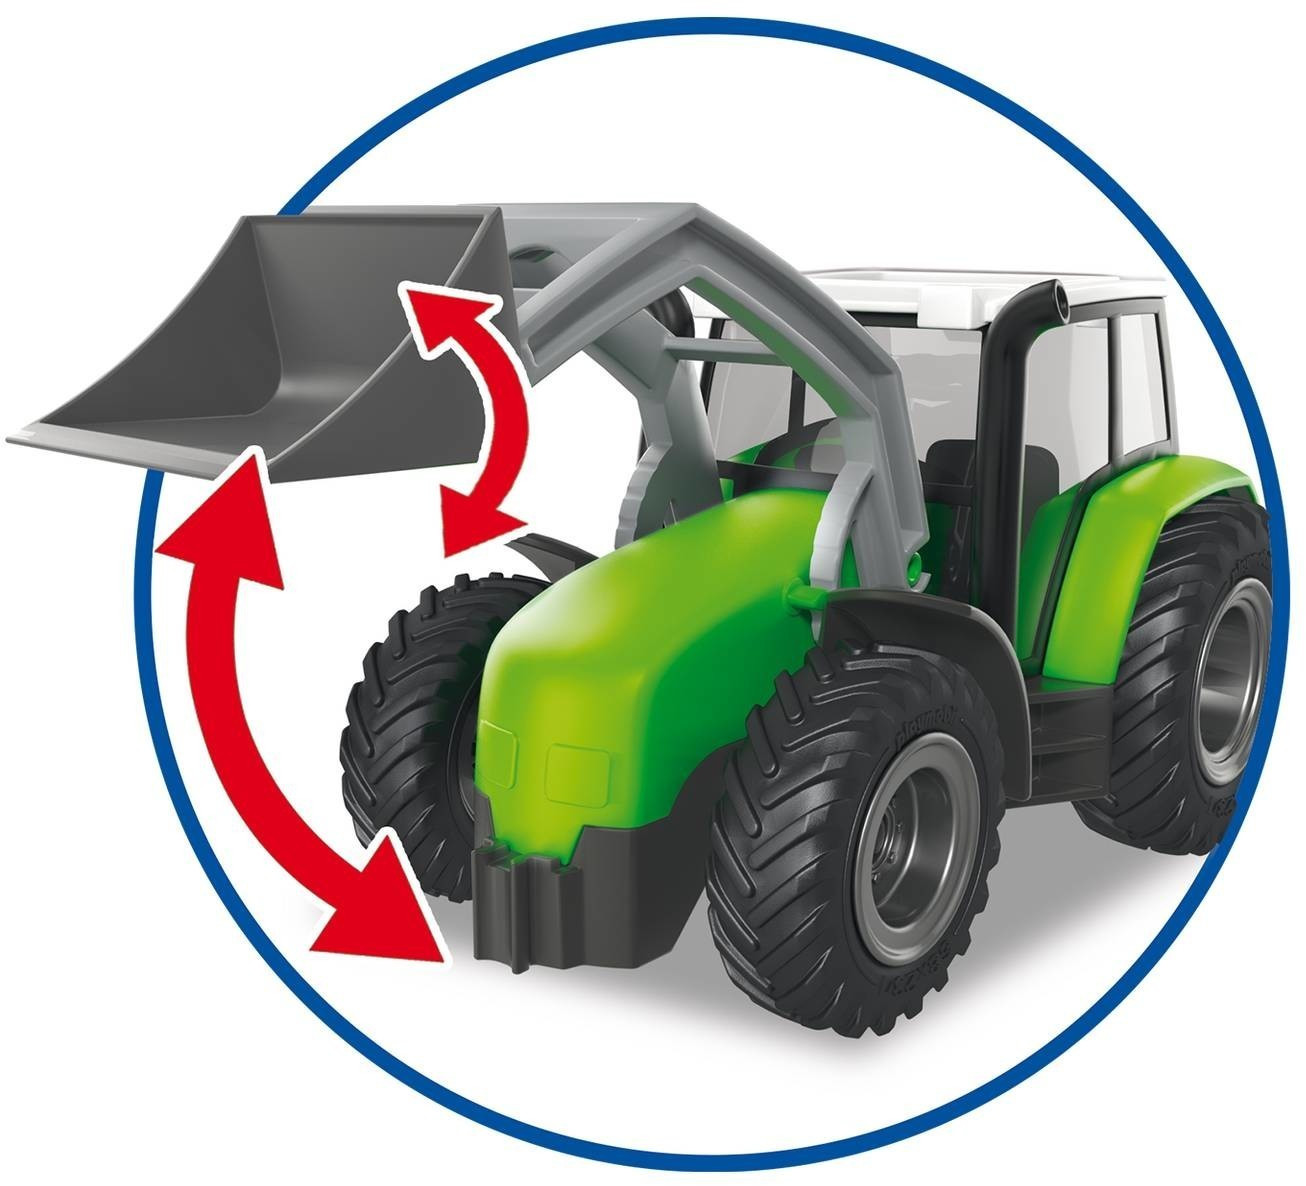 Playmobil Großer Traktor mit Anhänger ab 77,95 | Preisvergleich bei idealo.de